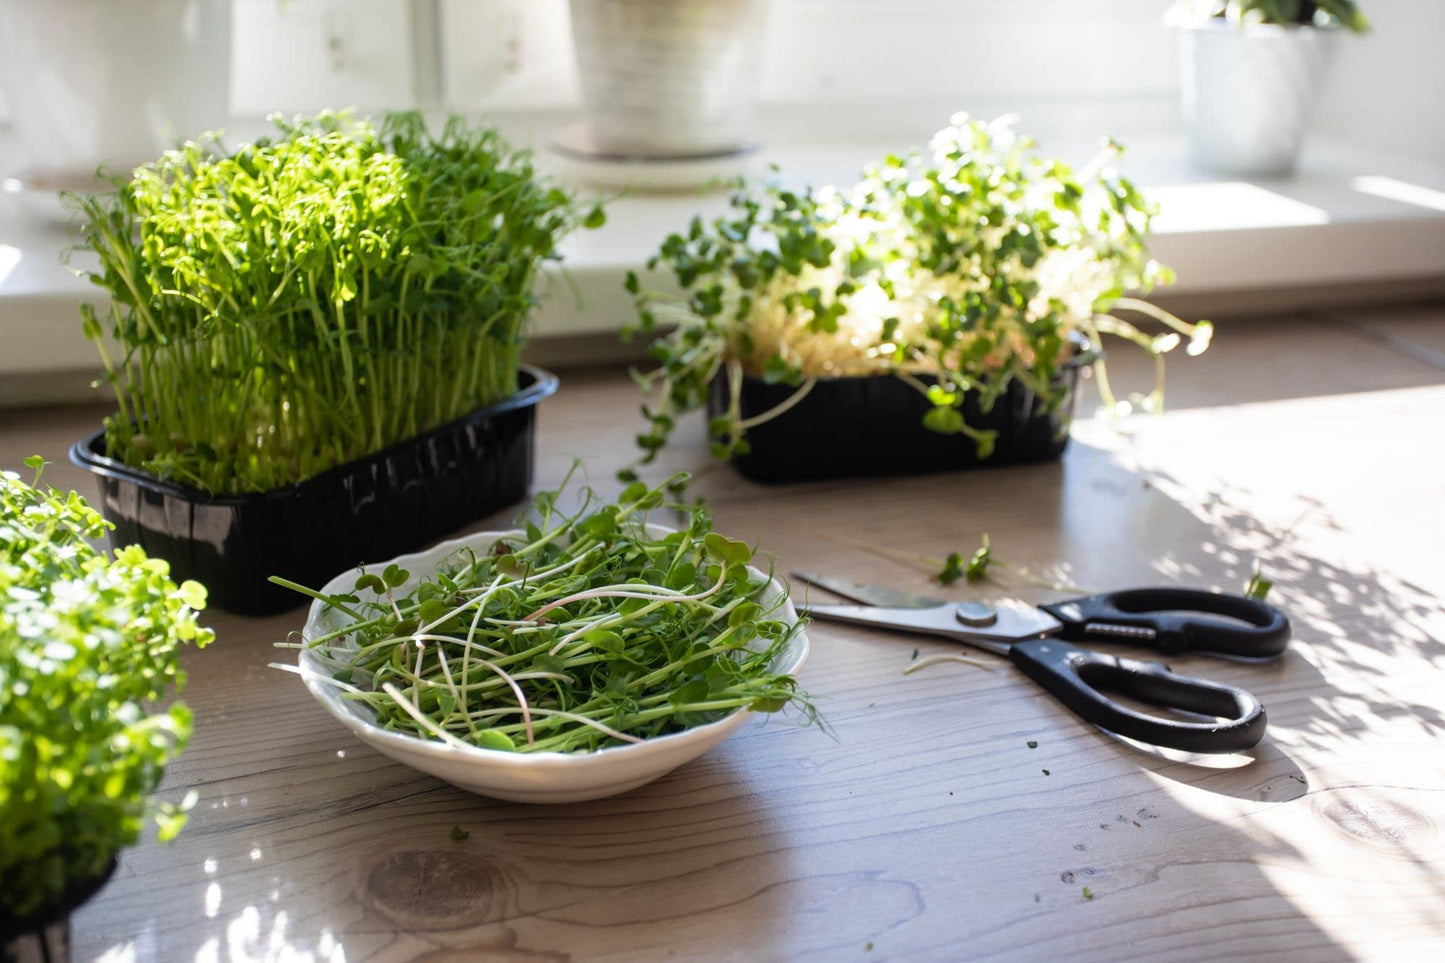 Acqua Smart Garden 3.0 - Complete Grow Your Own Package - AcquaGarden